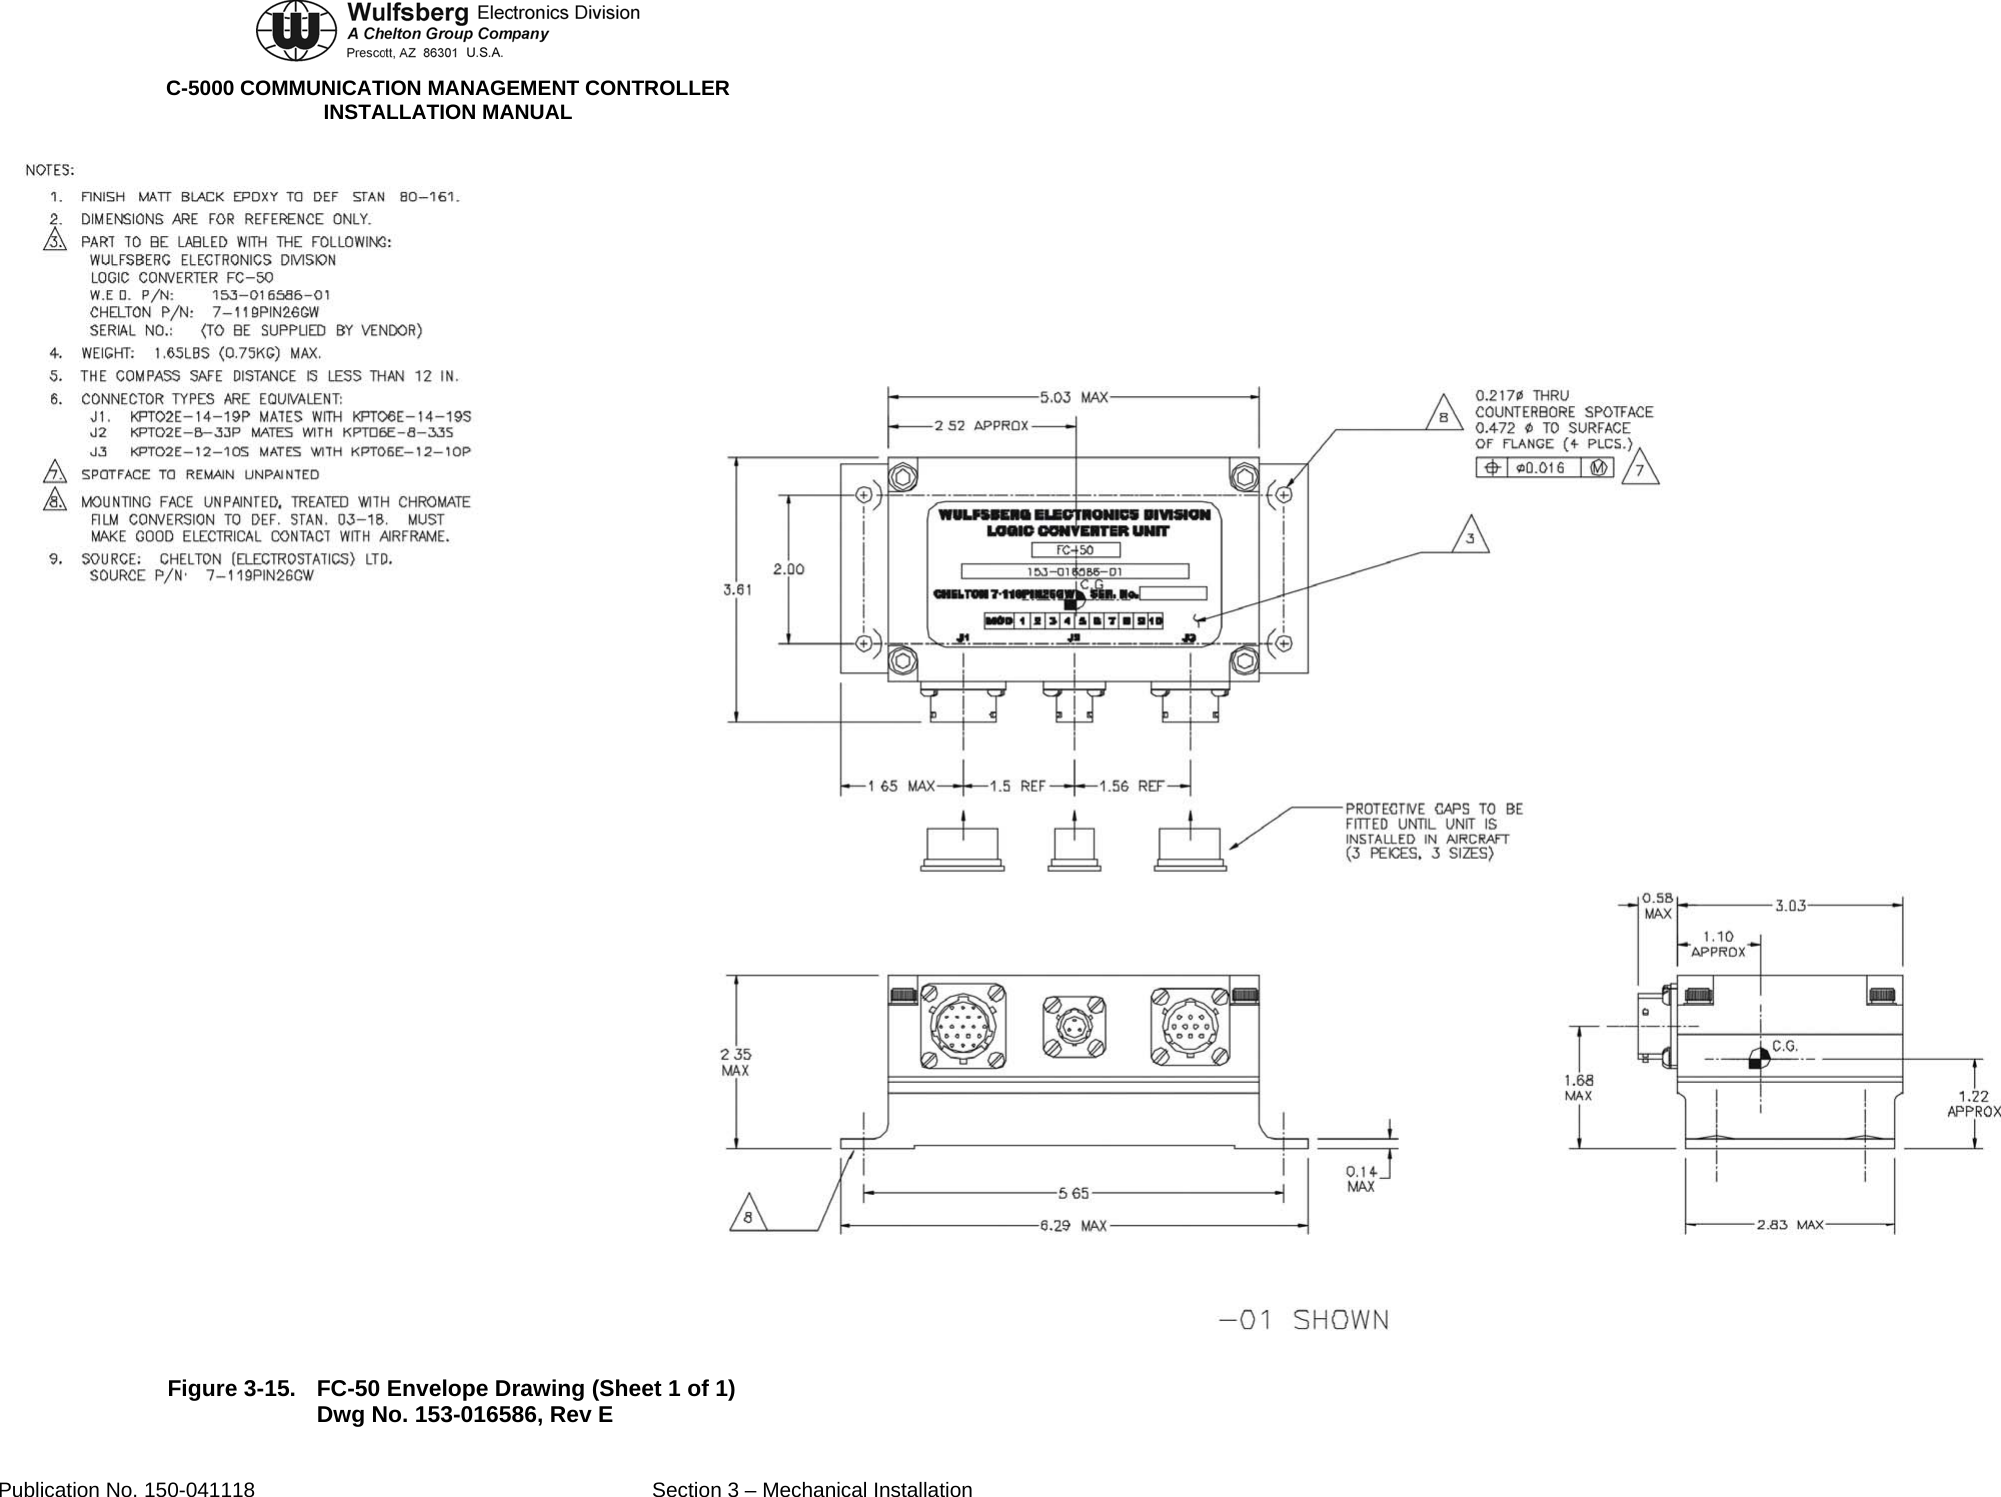  C-5000 COMMUNICATION MANAGEMENT CONTROLLER INSTALLATION MANUAL  Figure 3-15.  FC-50 Envelope Drawing (Sheet 1 of 1) Dwg No. 153-016586, Rev E Publication No. 150-041118  Section 3 – Mechanical Installation 